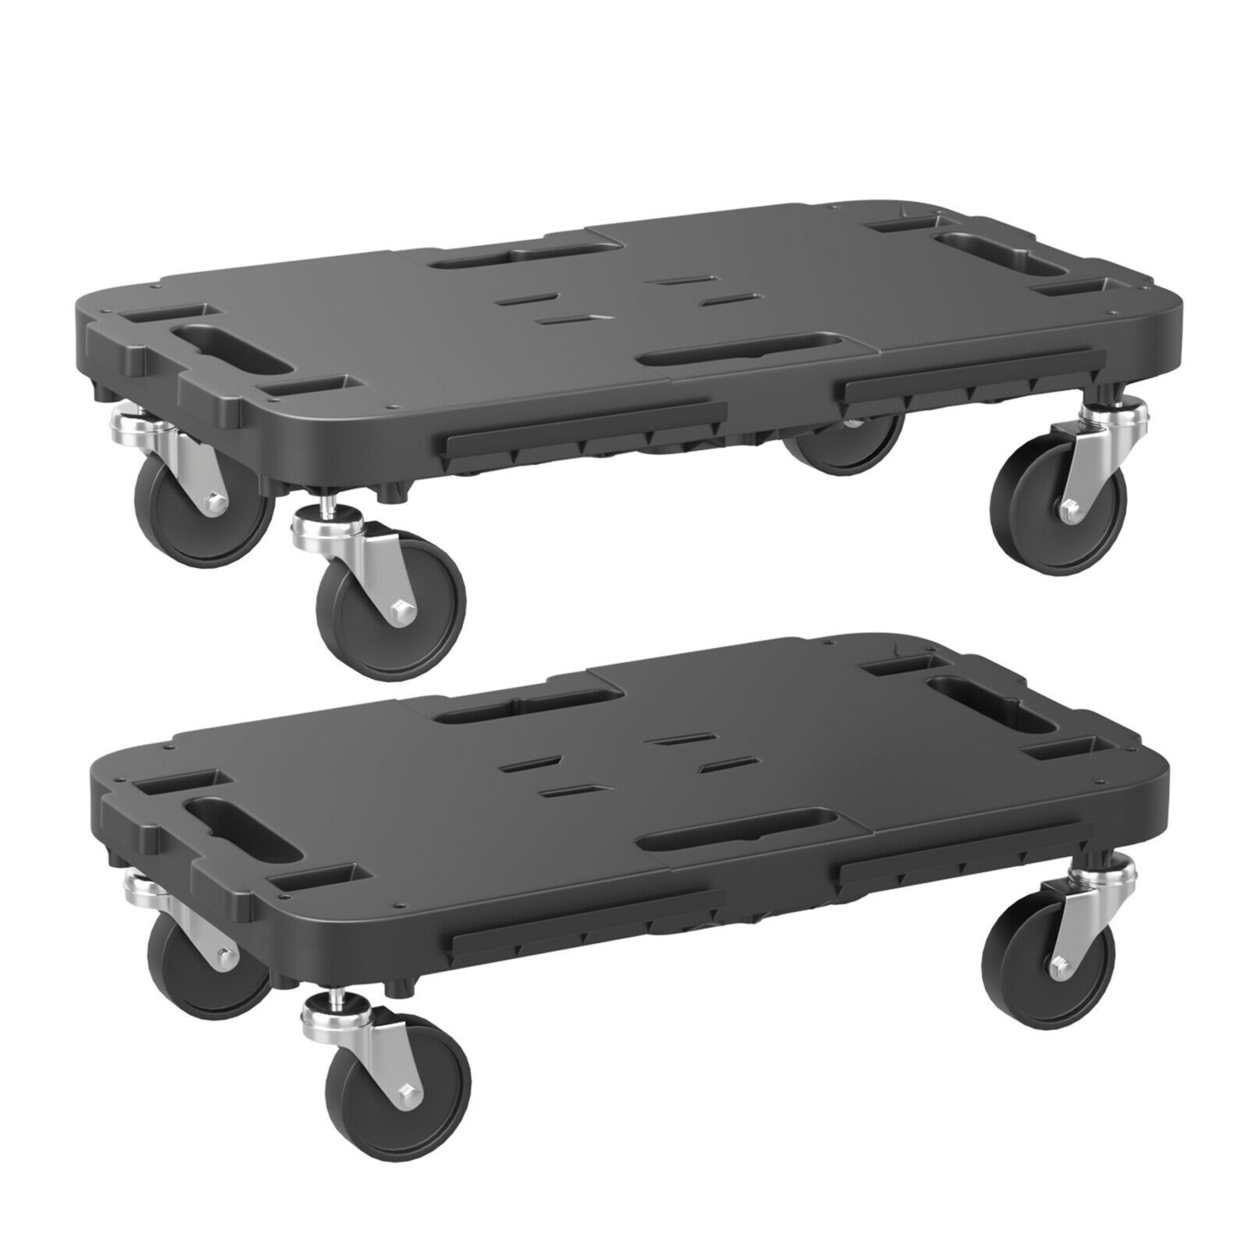 Platform Dolly Interlocking Furniture Mover 660lbs Weight Capacity - 2 Pcs